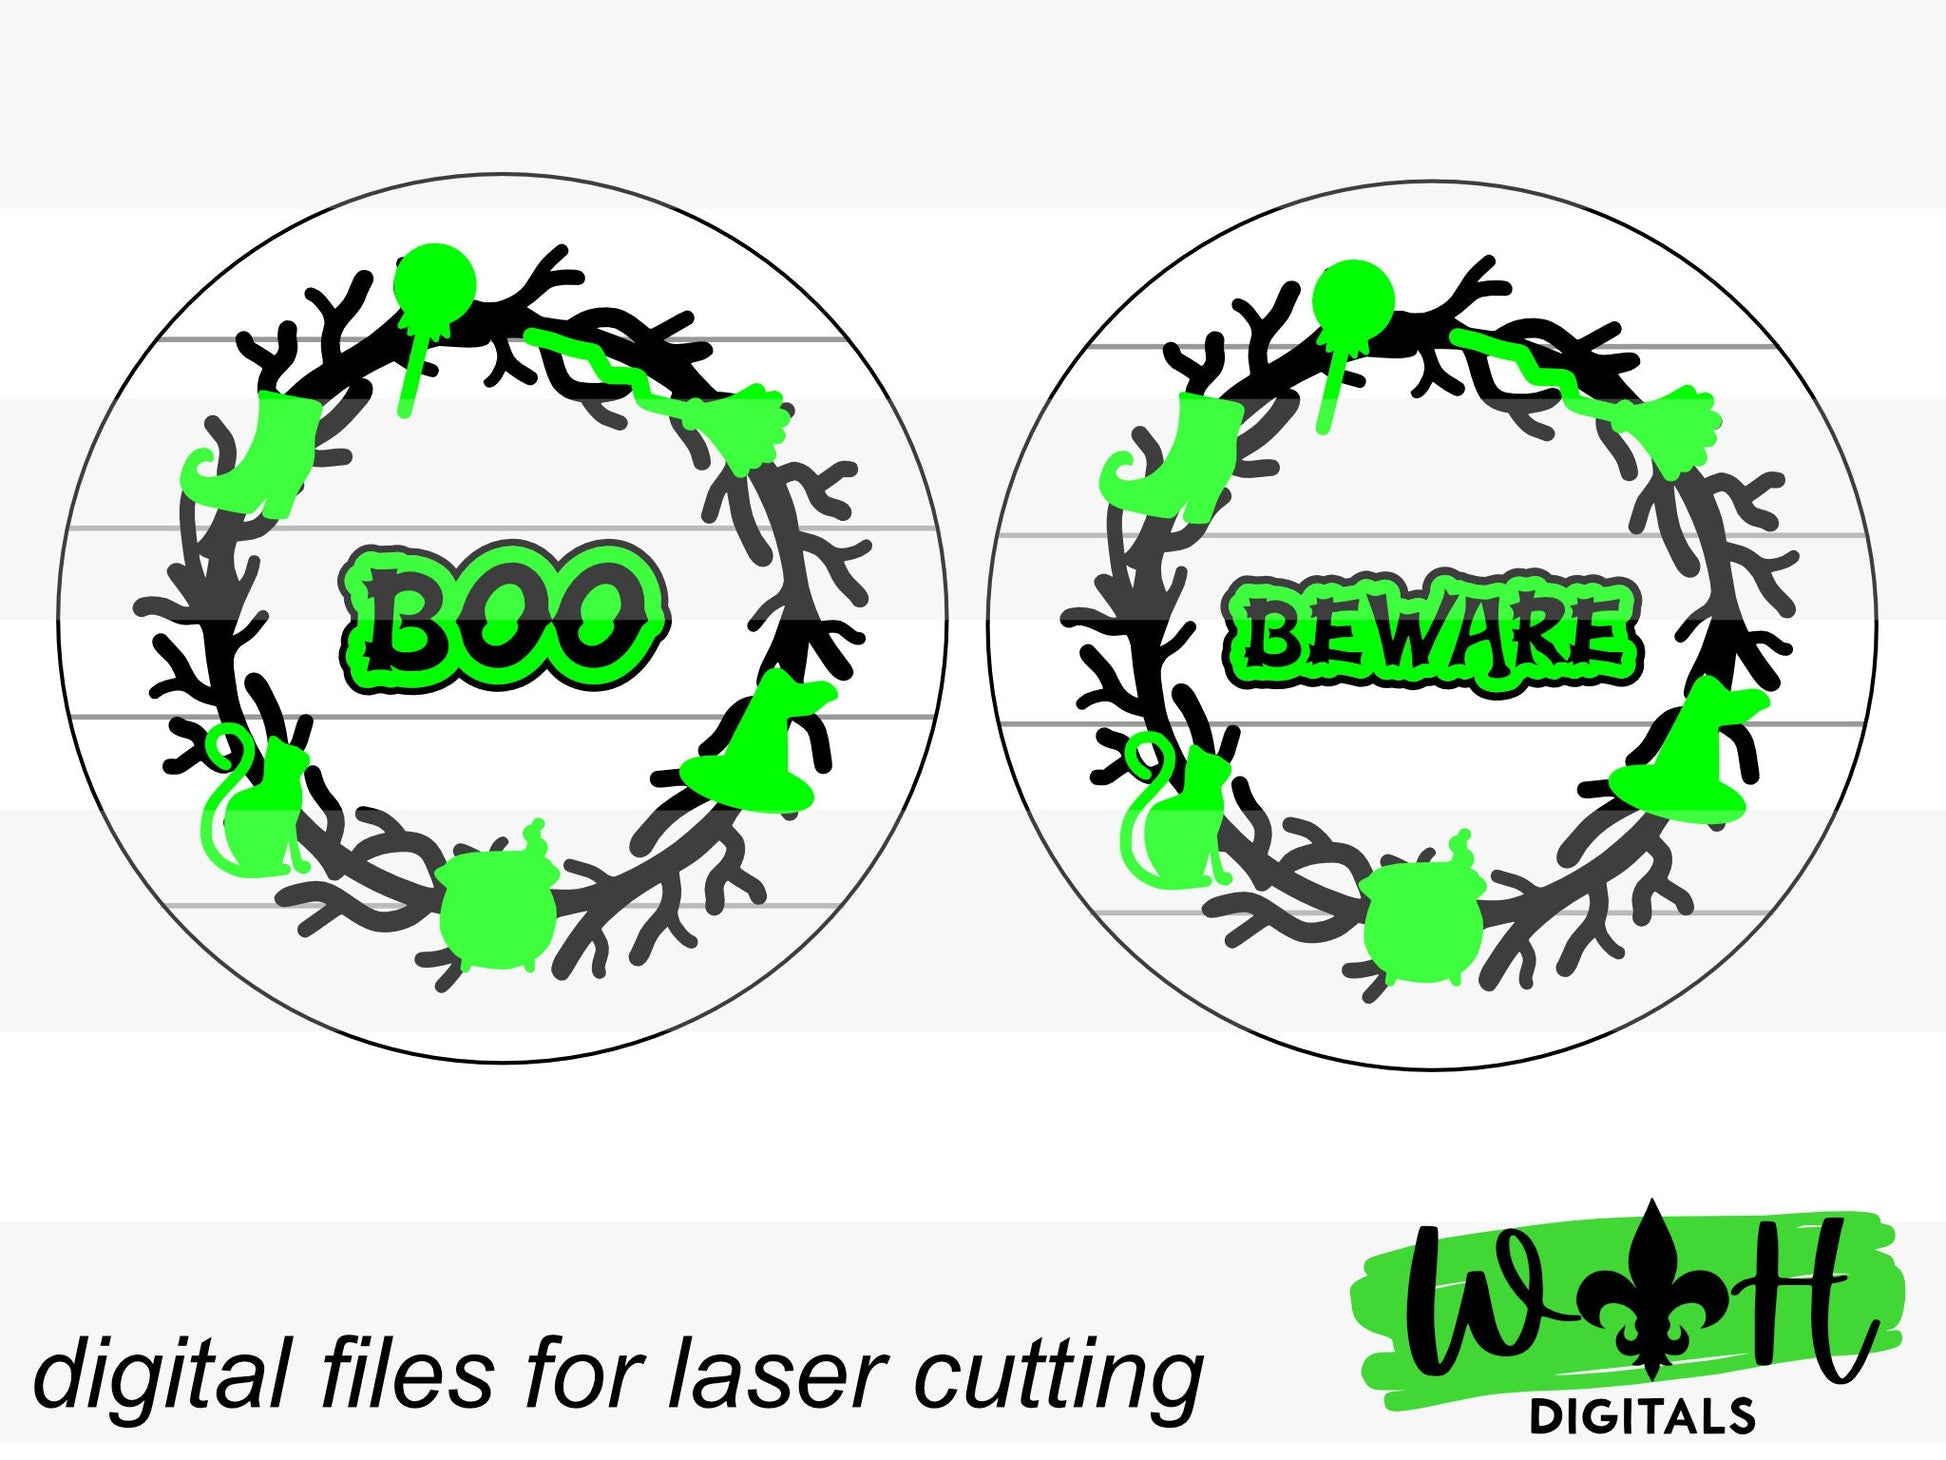 Boo Beware Halloween Wreath Door Hanger Round - Seasonal Sign Making and DIY Kits - Cut File For Glowforge Lasers - Digital SVG File